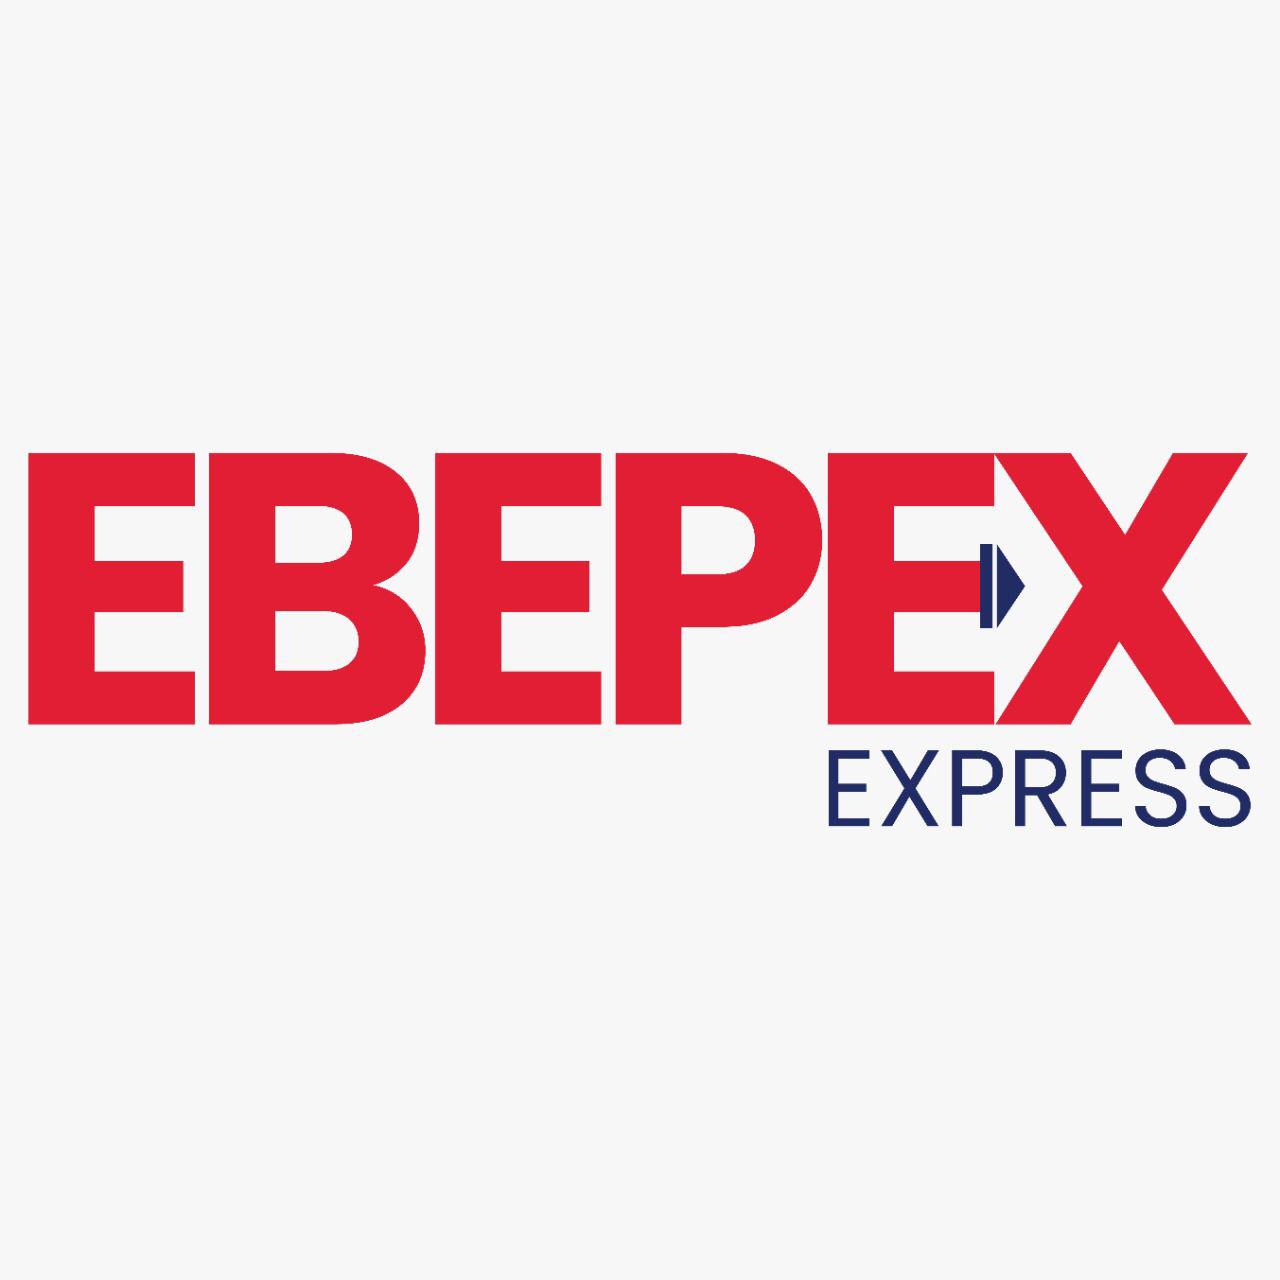 EBEPEX Express Logo